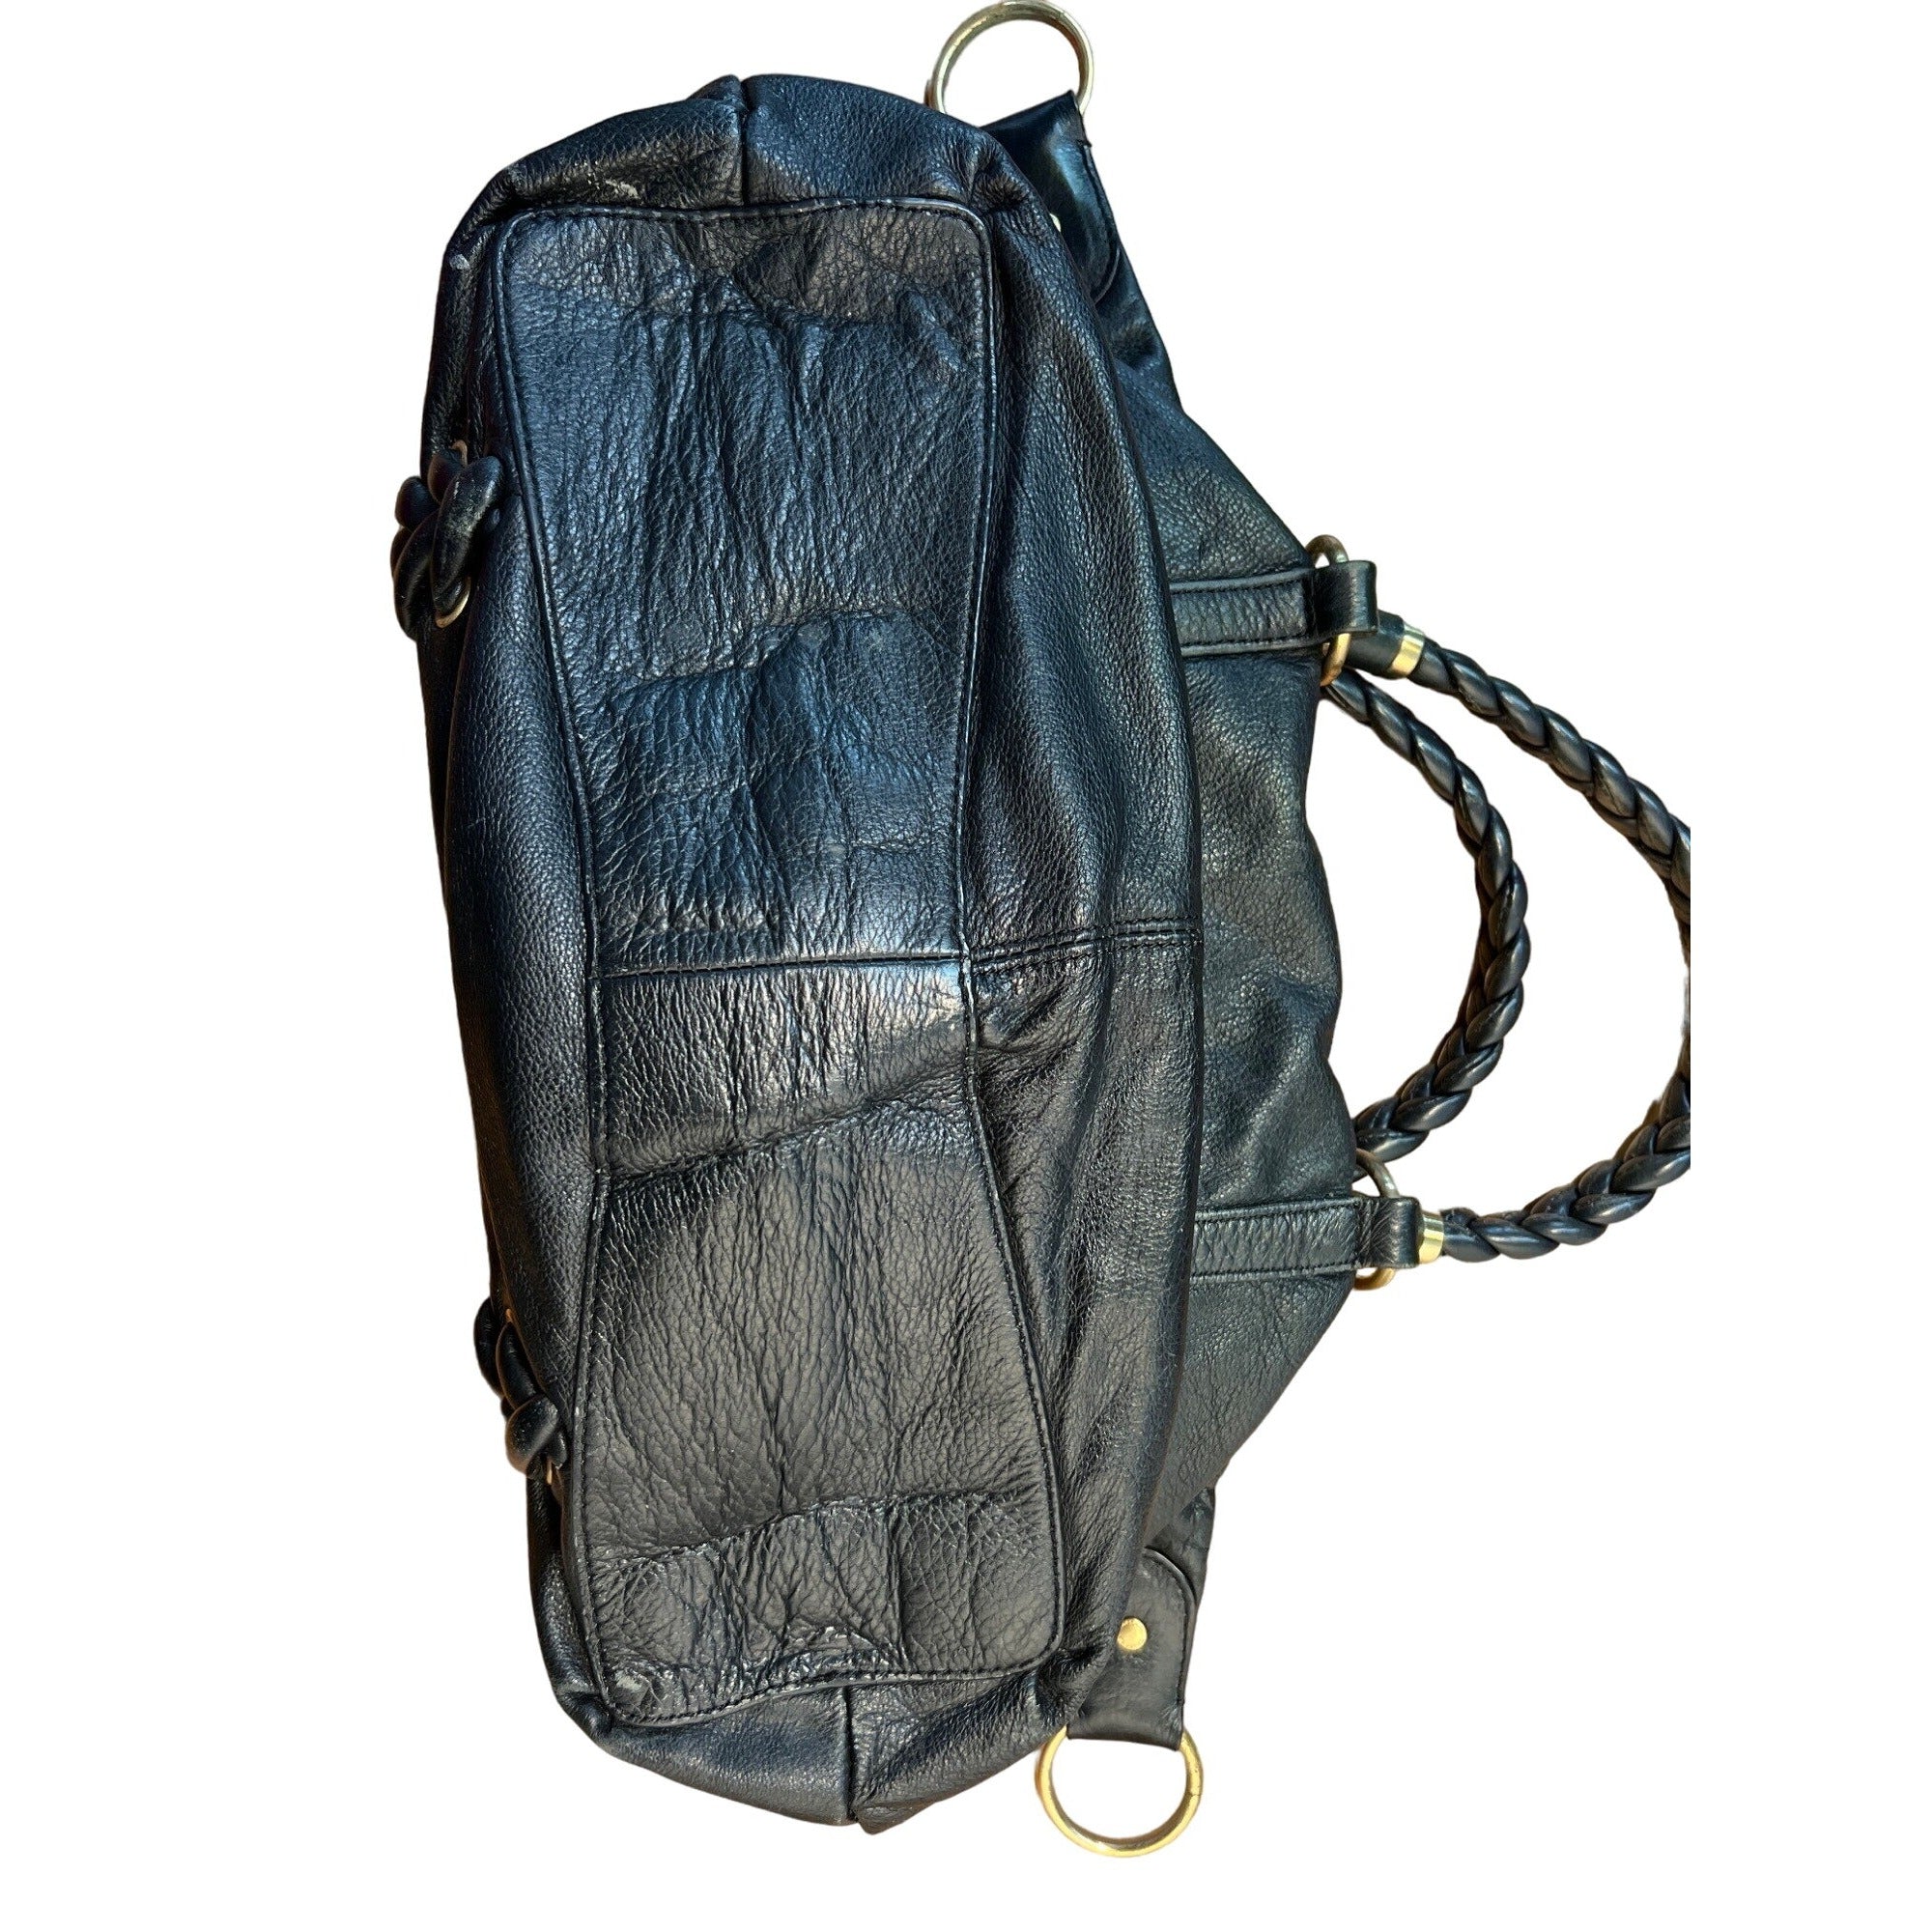 Tahari Handbag Black Leather Satchel Carryall Bag